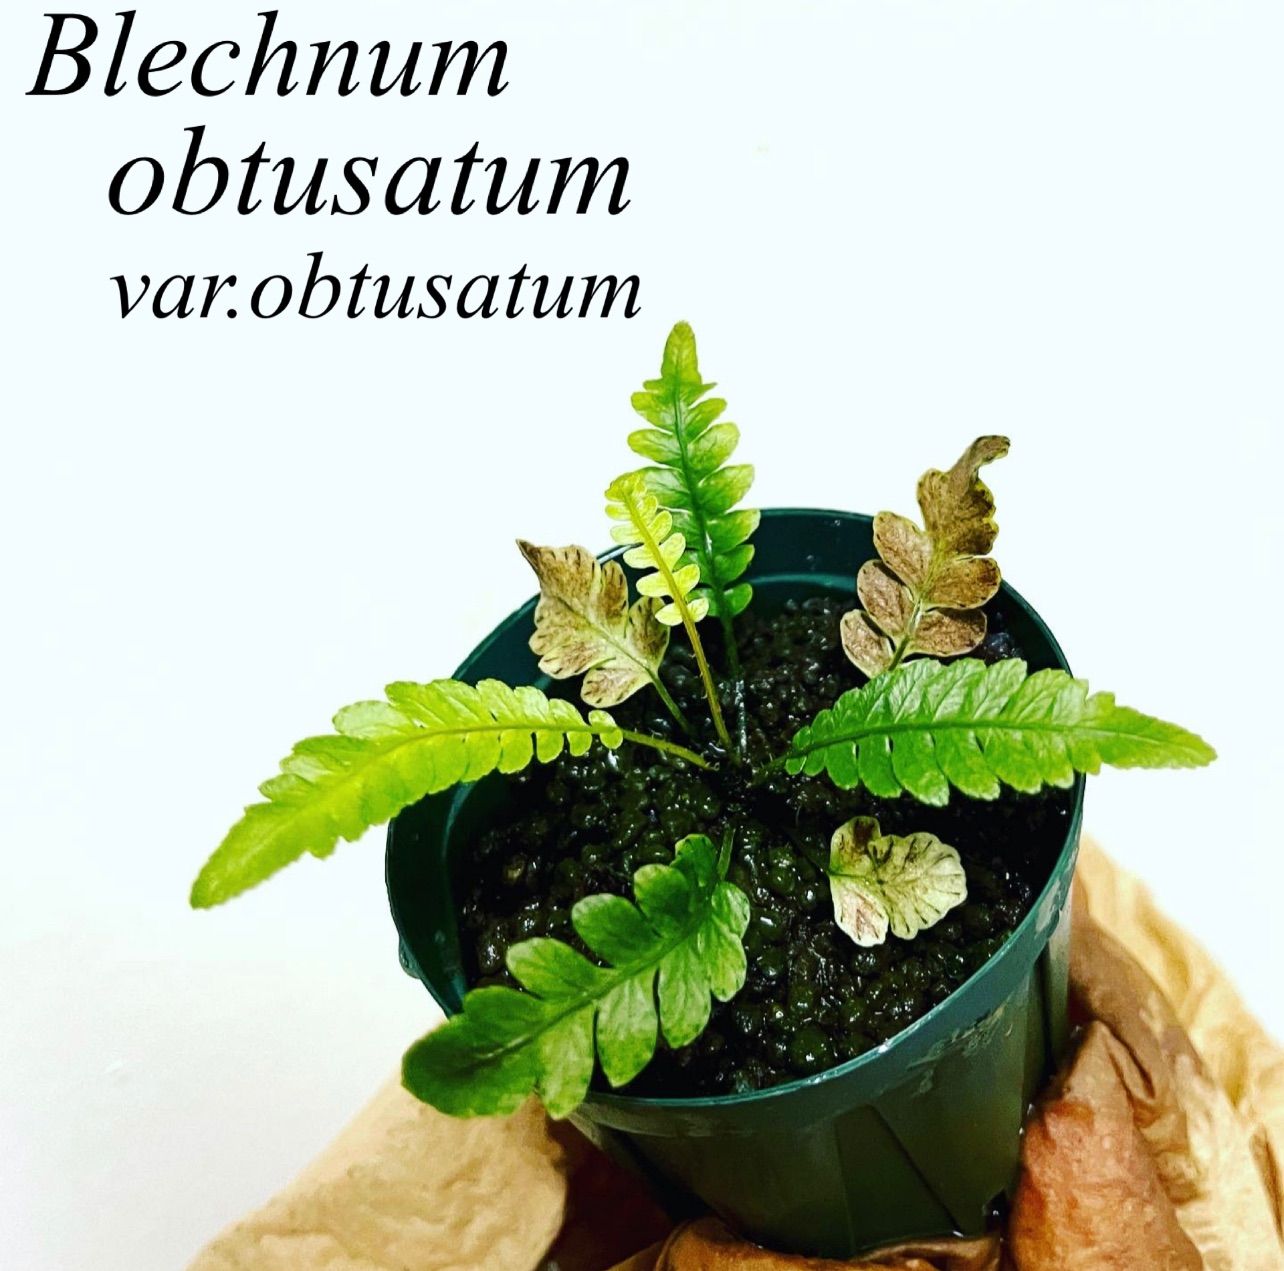 Blechnum obtusatum var. ブレクナム・オブツサタム はじまる植物 メルカリ